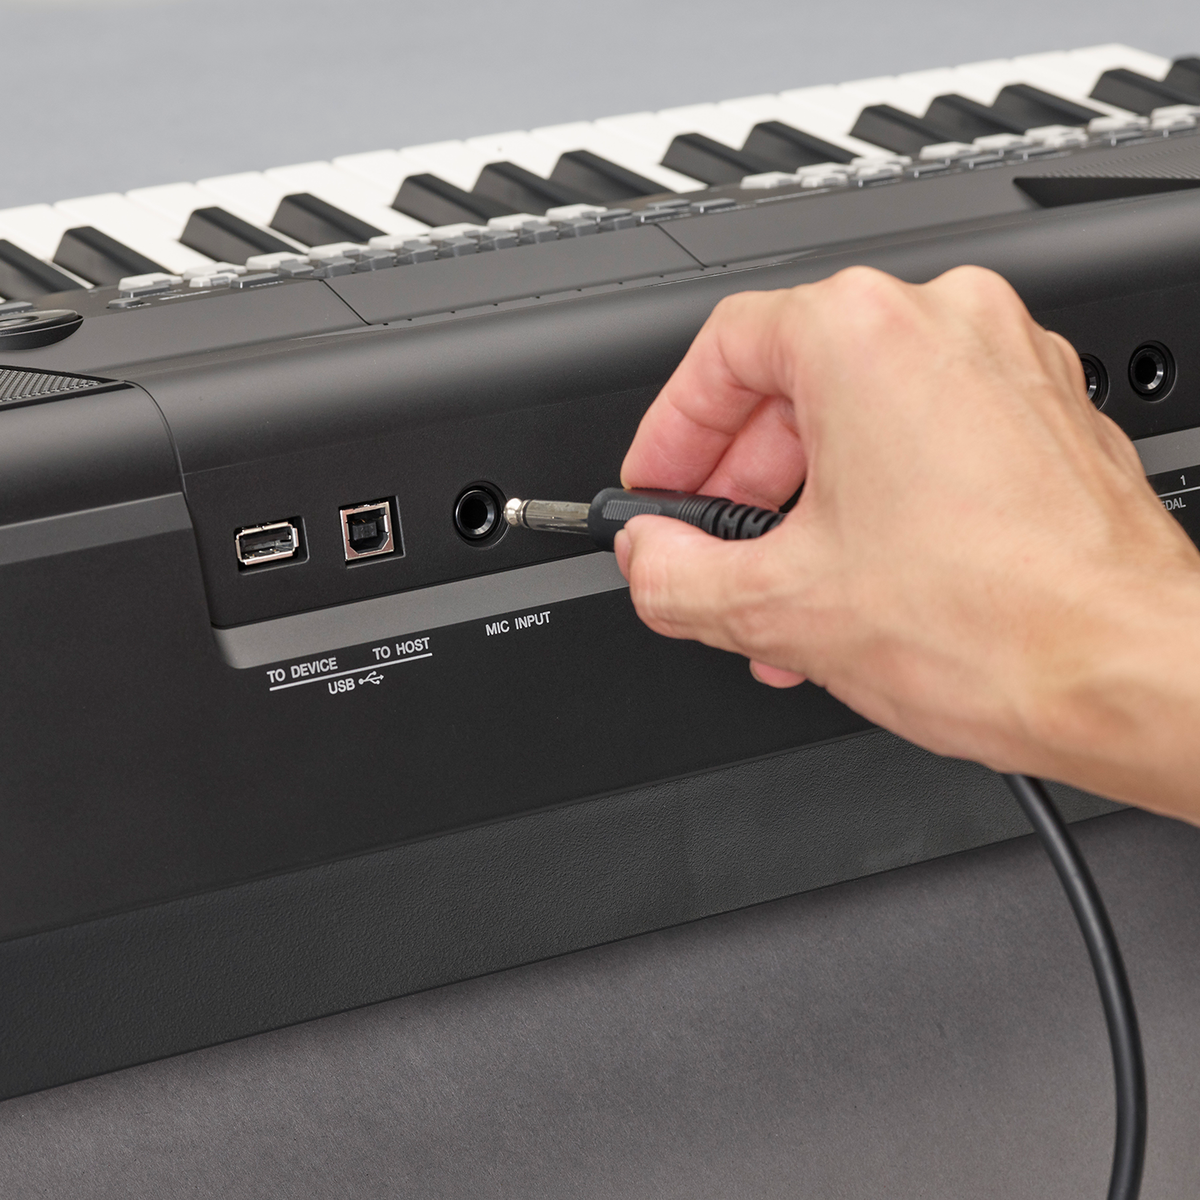 Yamaha - PSR-SX600 - 61-Keys Arranger Workstation Keyboard